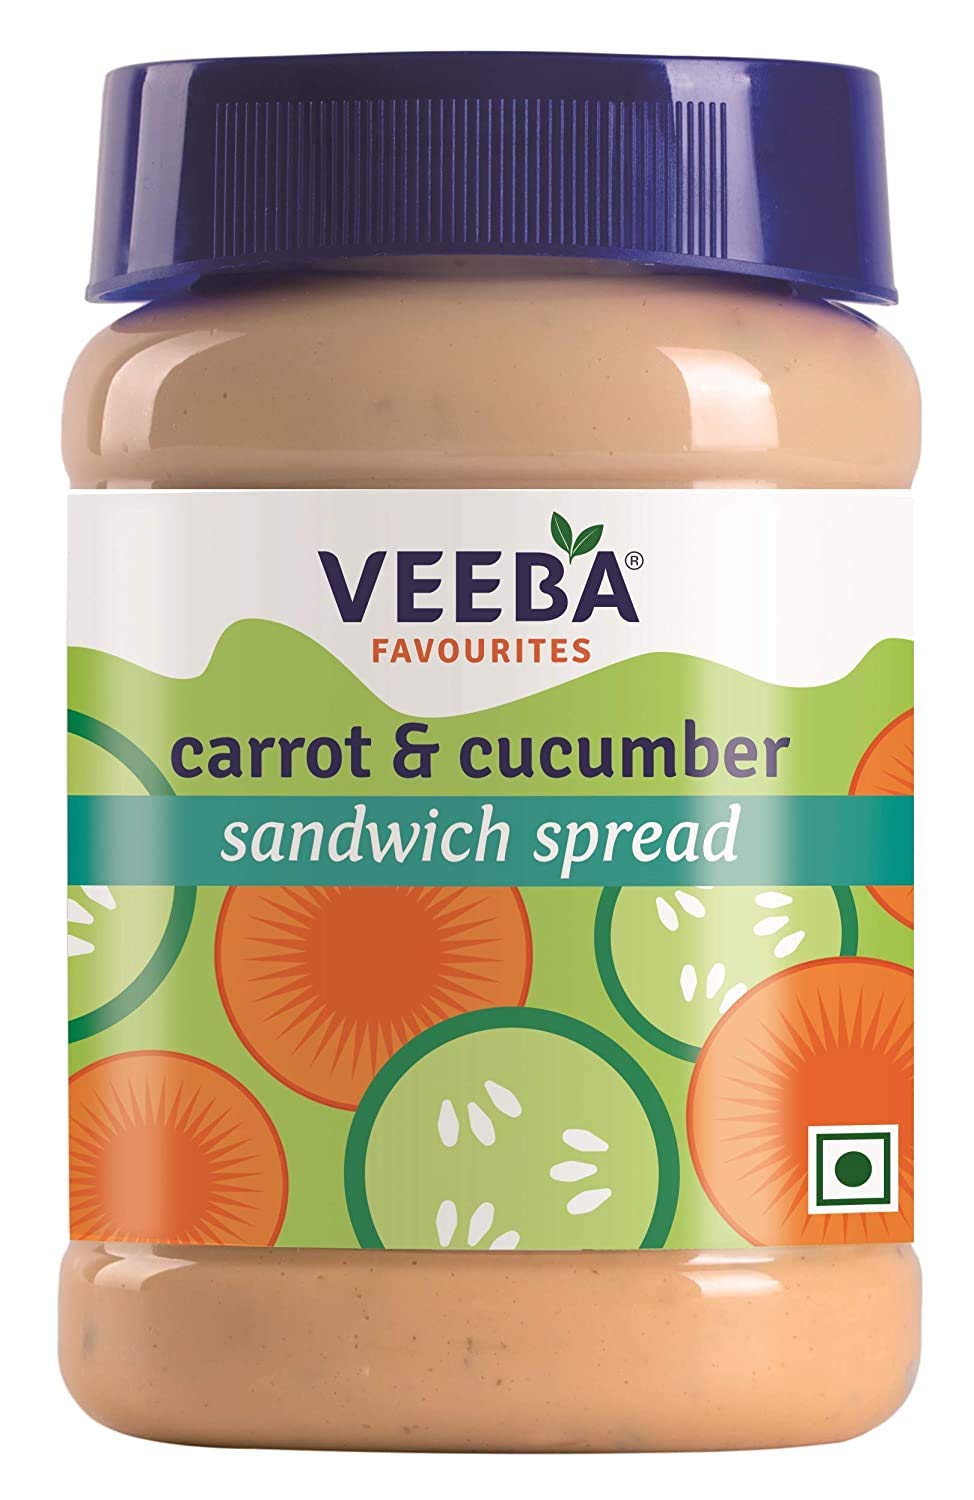 Veeba carrot & cucumber sandwich spread